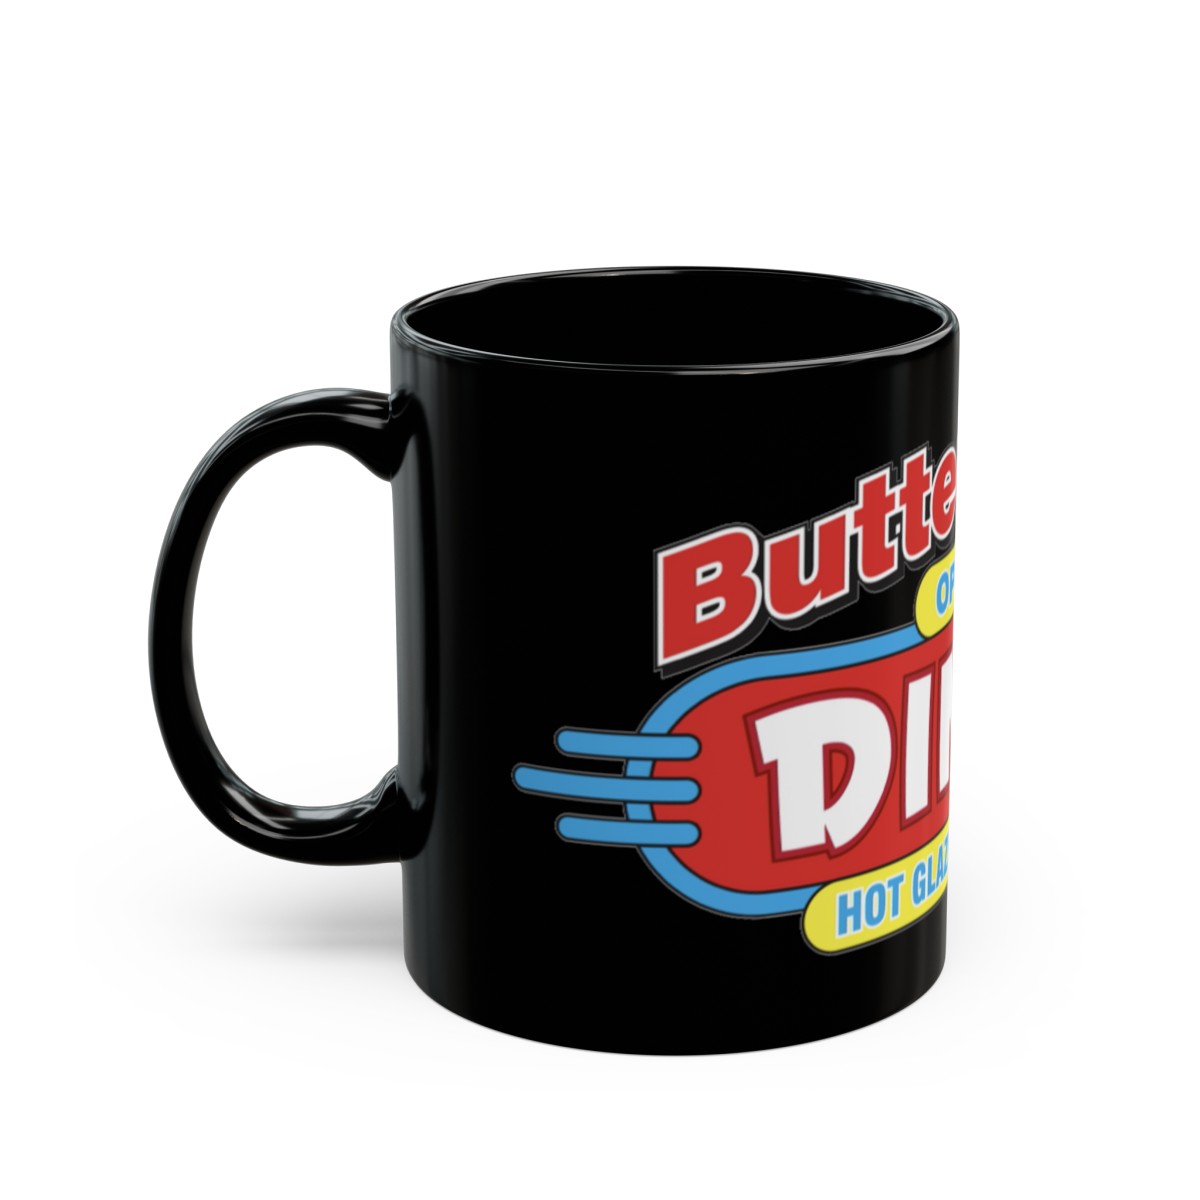 BKD Black Mug product thumbnail image